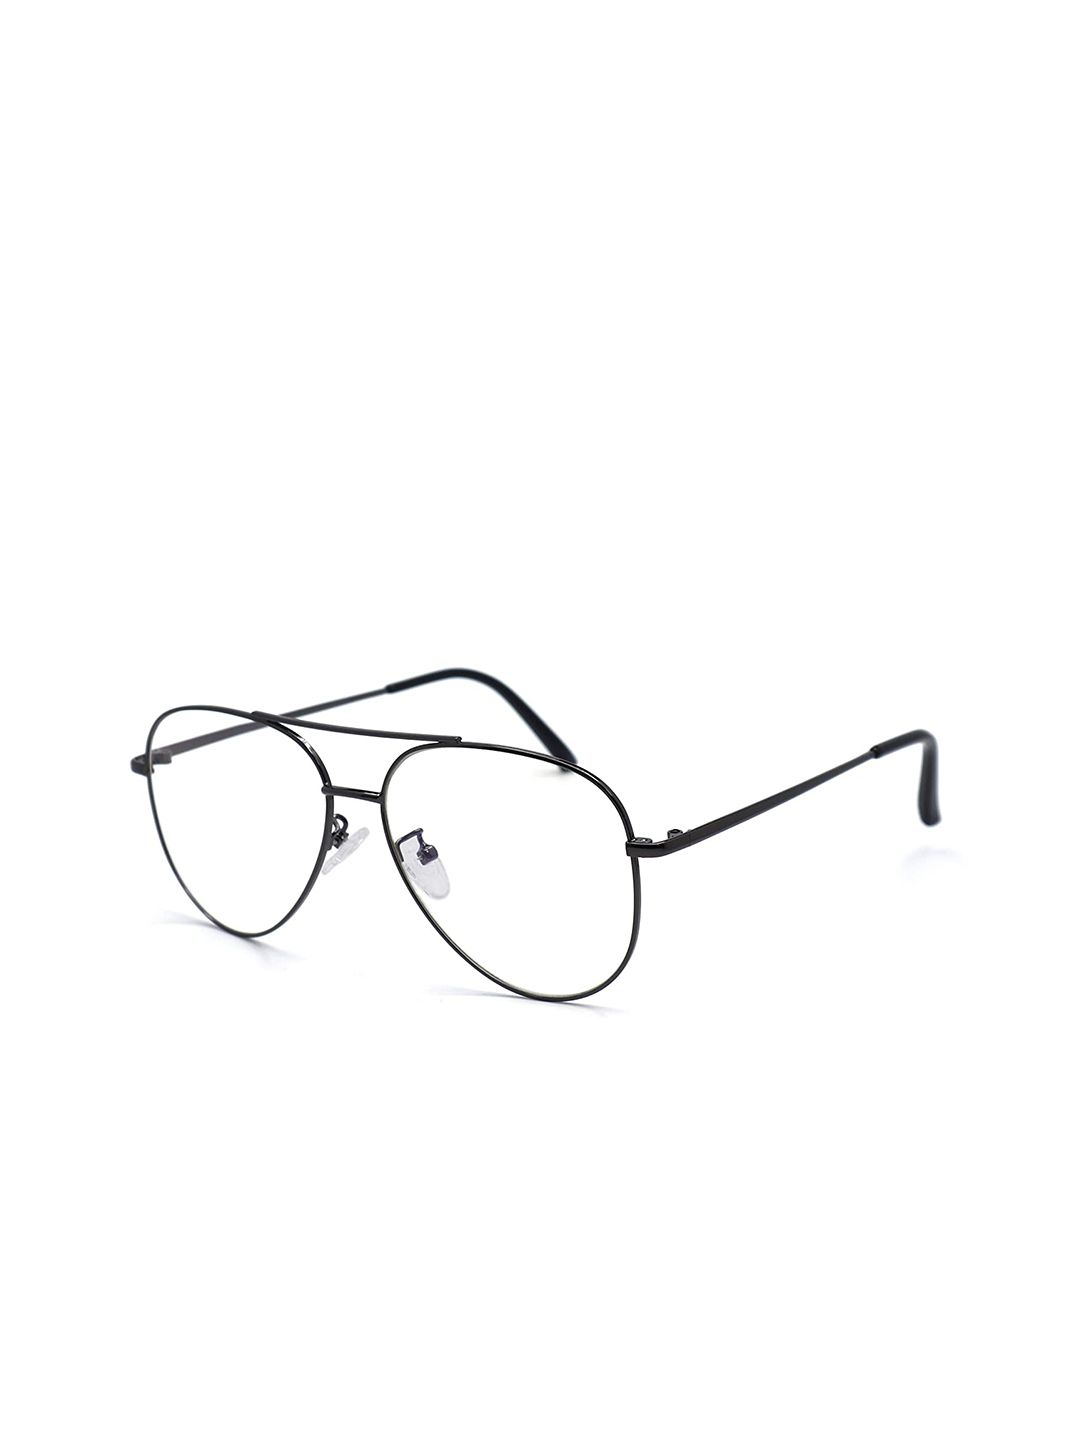 OPTIFY Unisex Clear Lens & Black Aviator Sunglasses Price in India